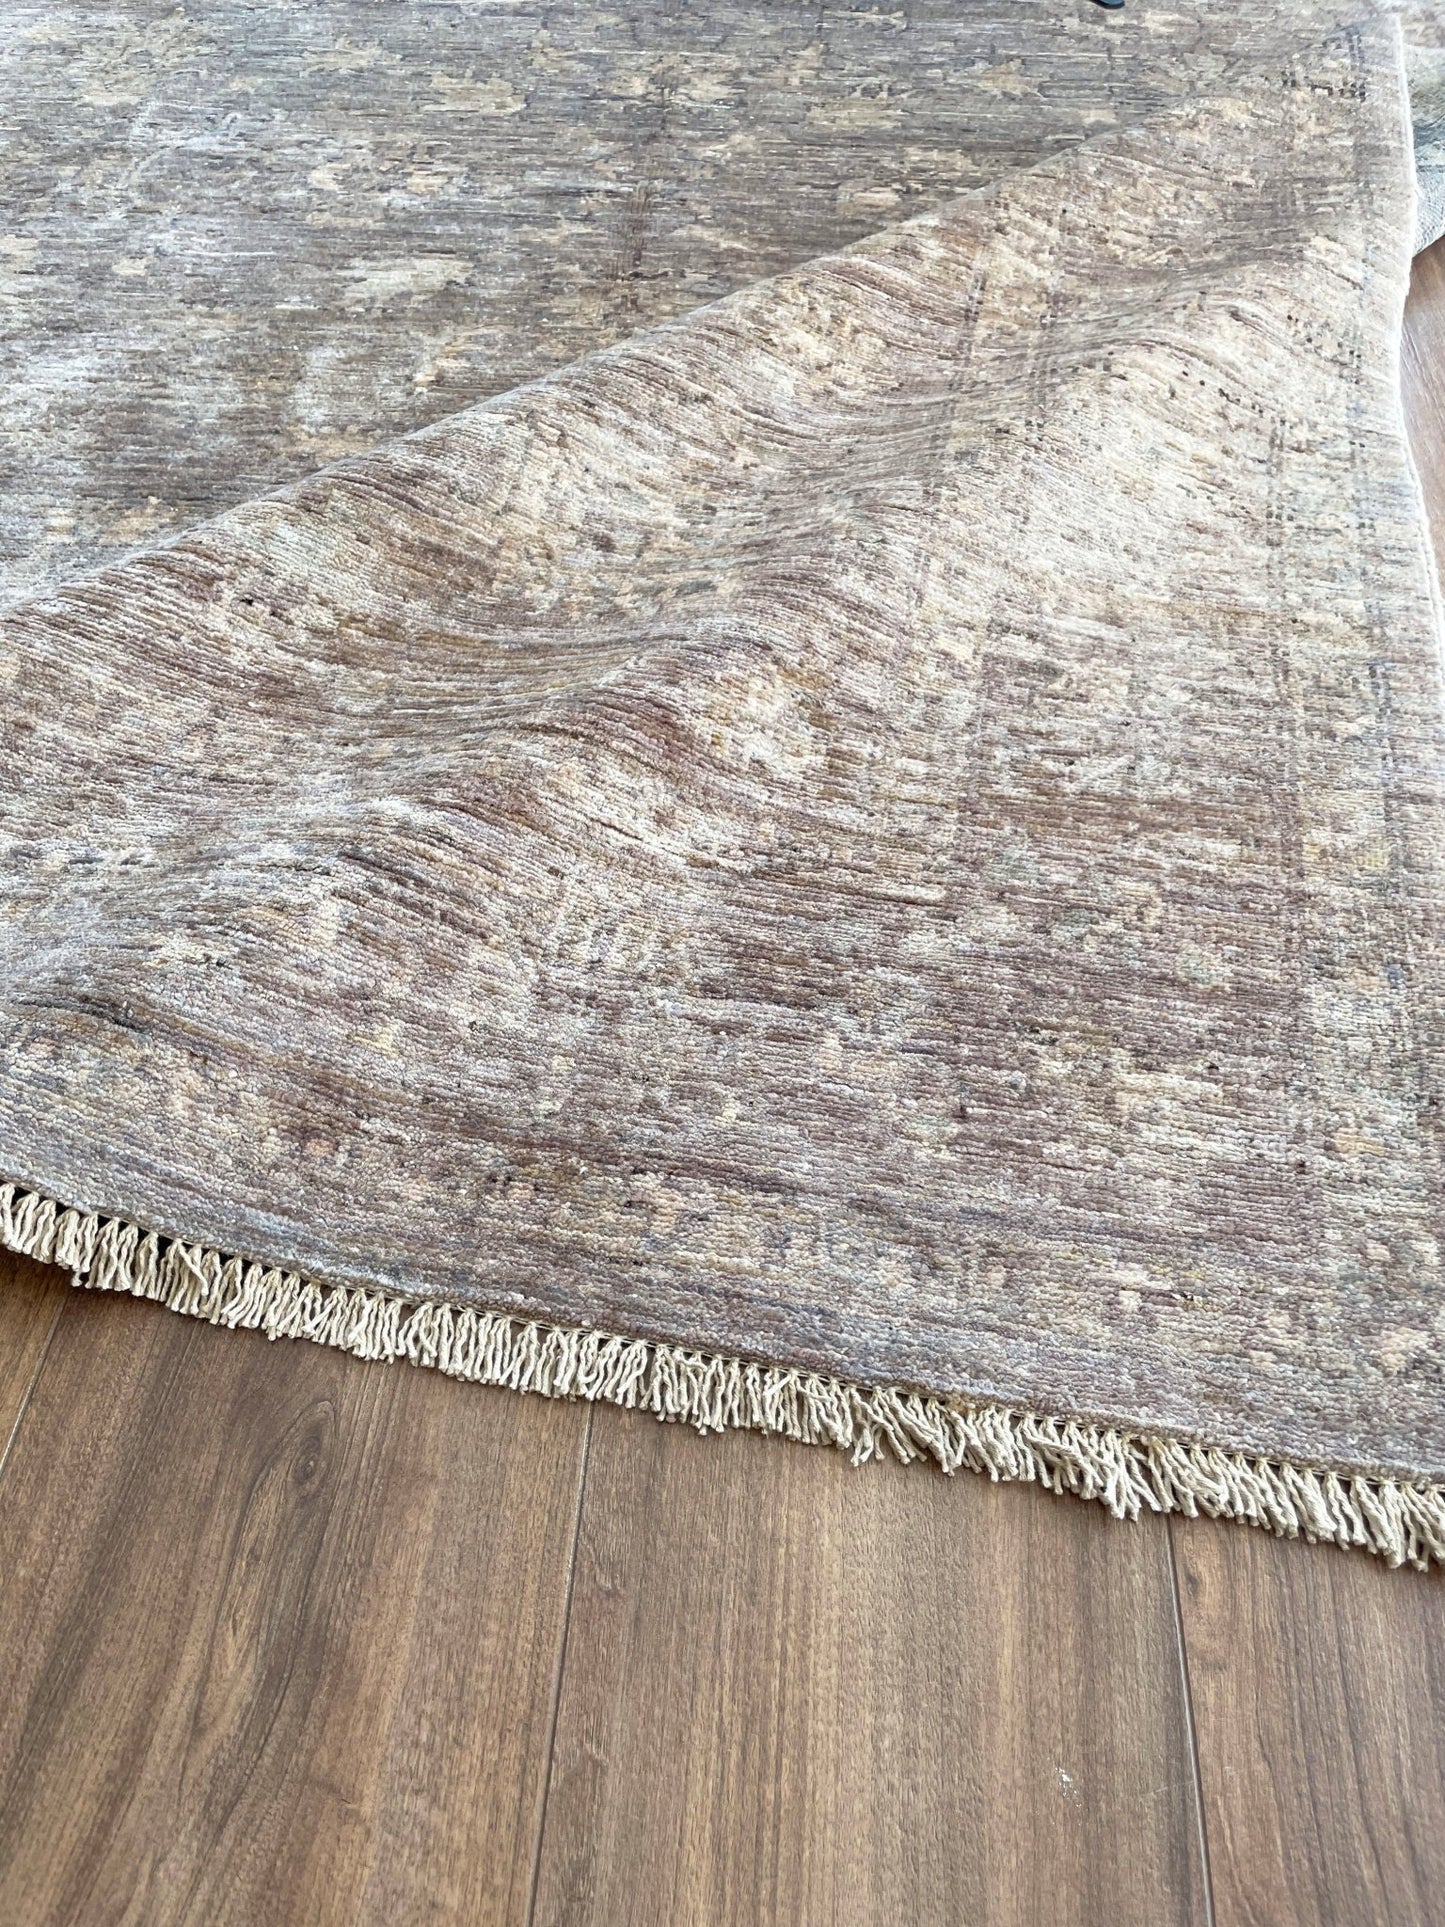 Muted handmade oushak turkish rug shop san francisco bay area oriental rug palo alto vintage rug berkeley buy rugs online